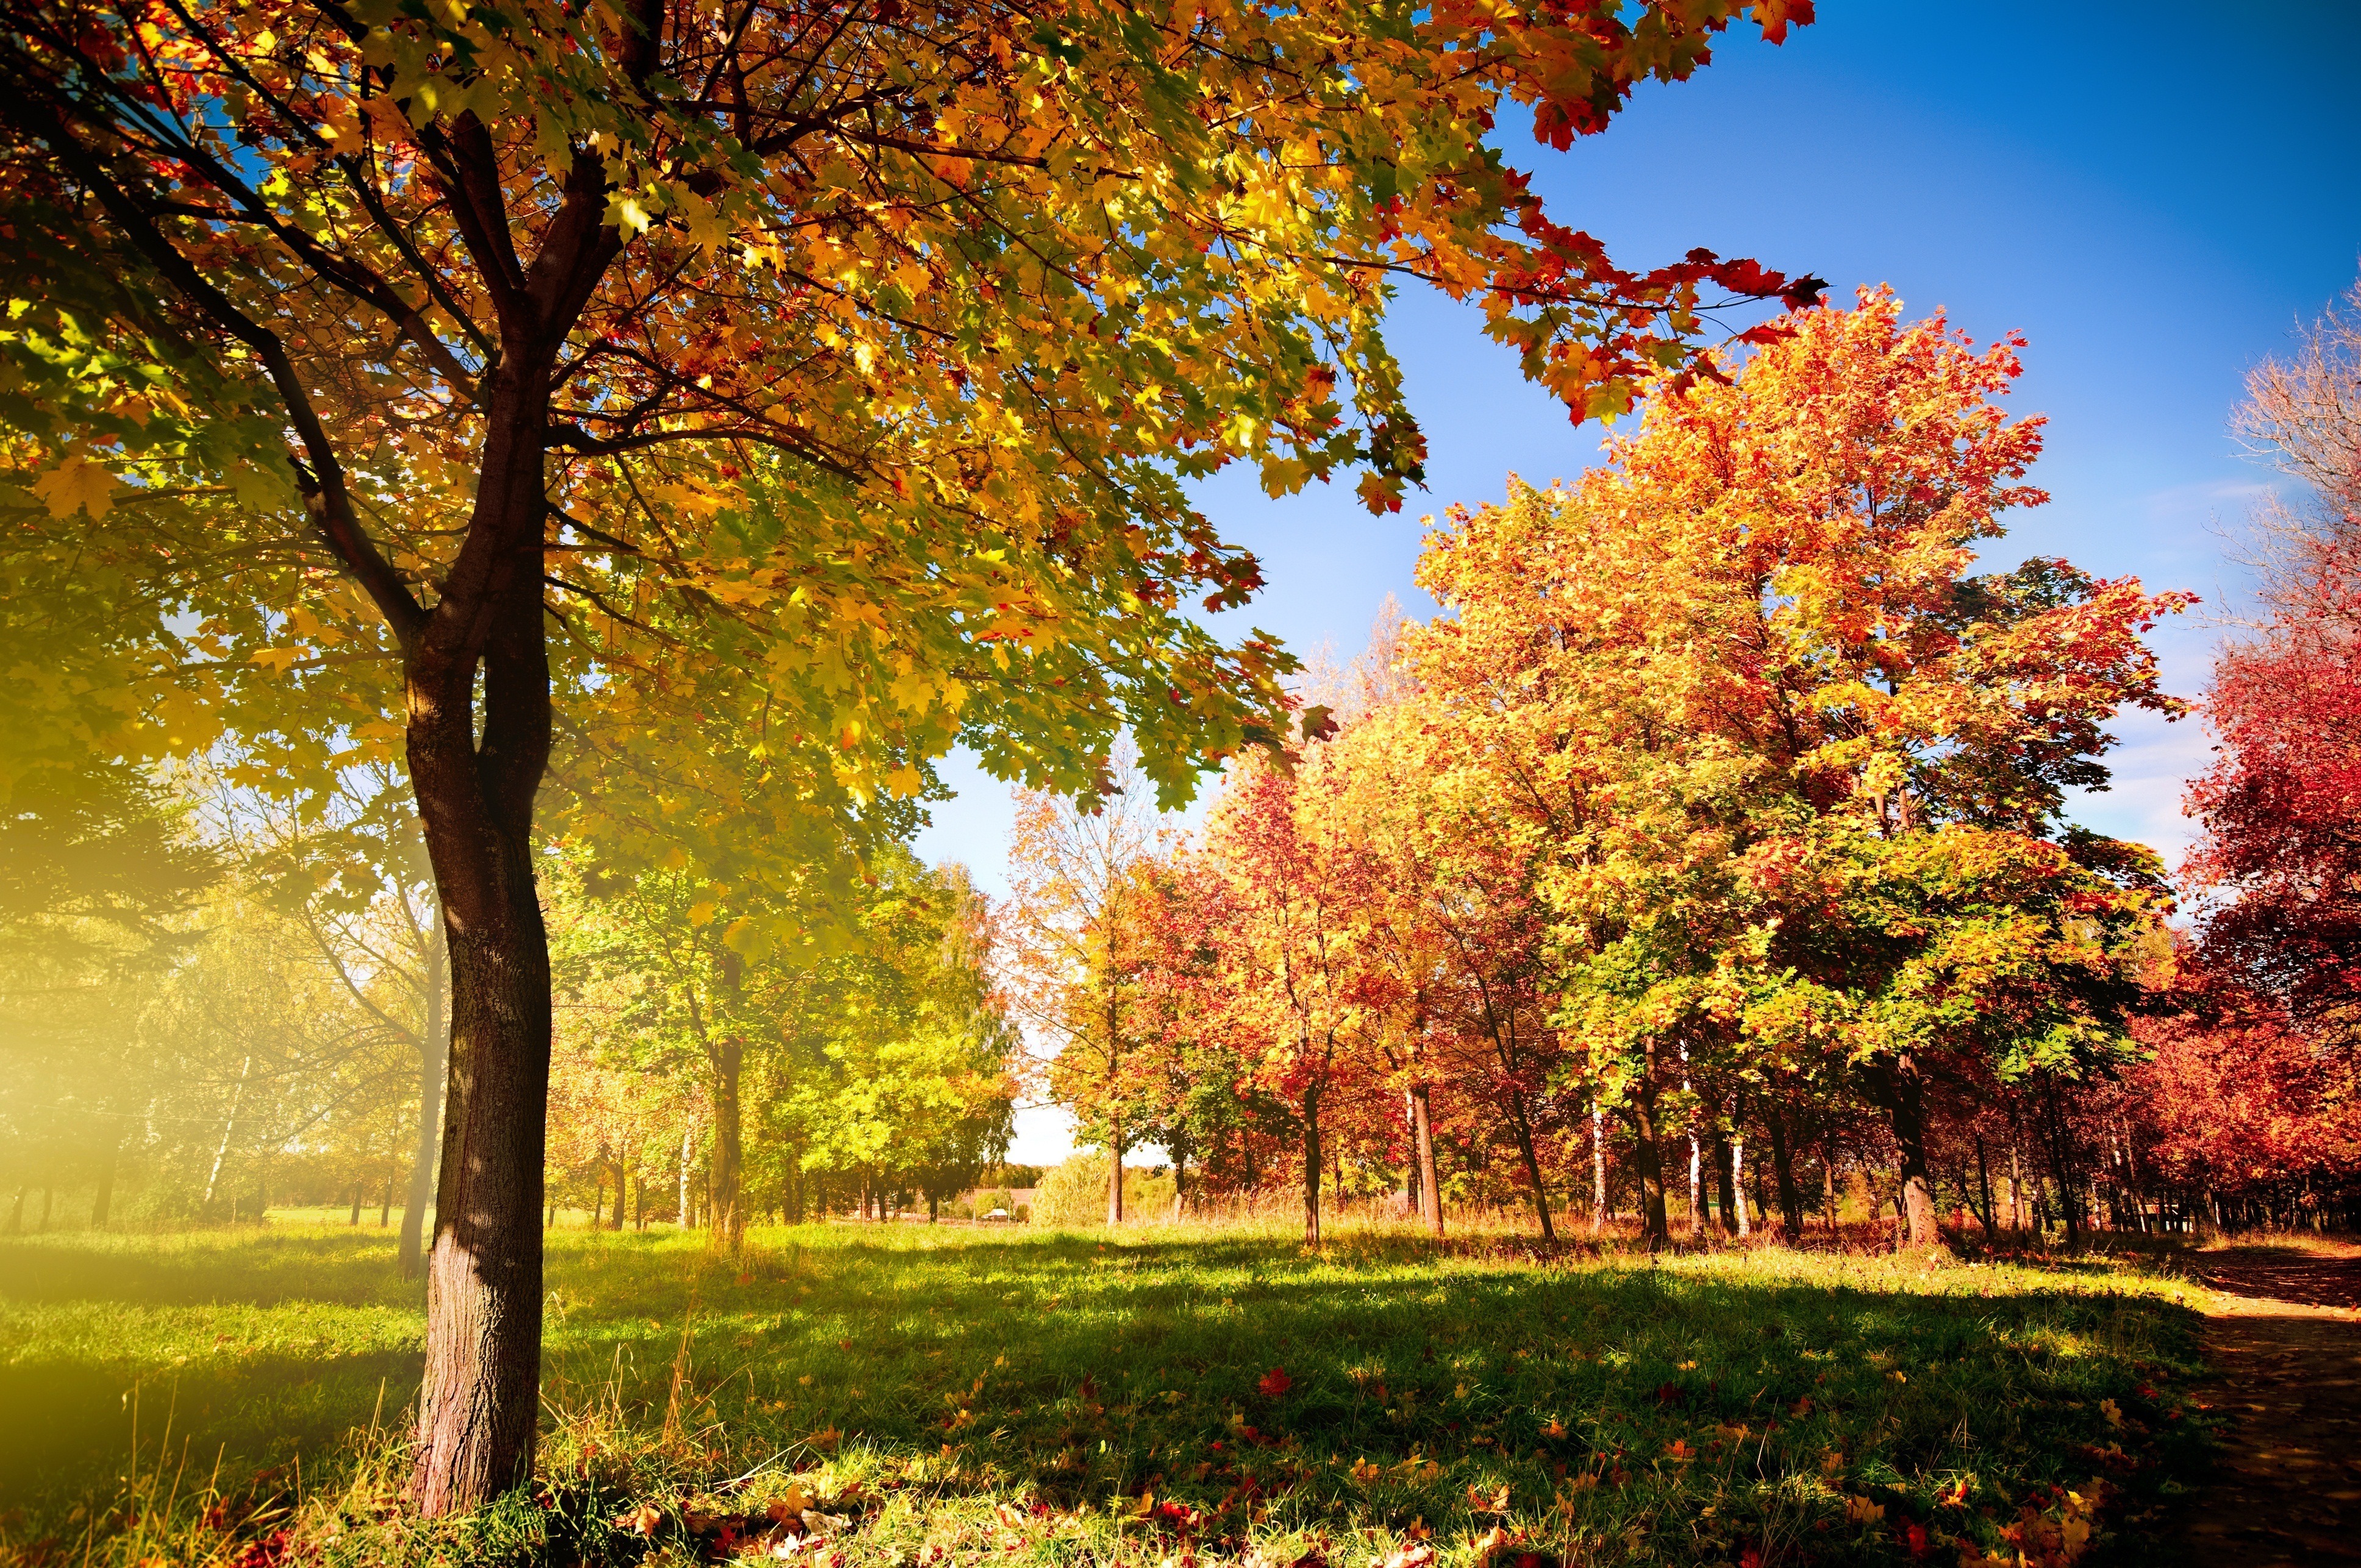 Картинки на заставку. Ранняя осень. Красивая осень. Осенний пейзаж. Природа осень.